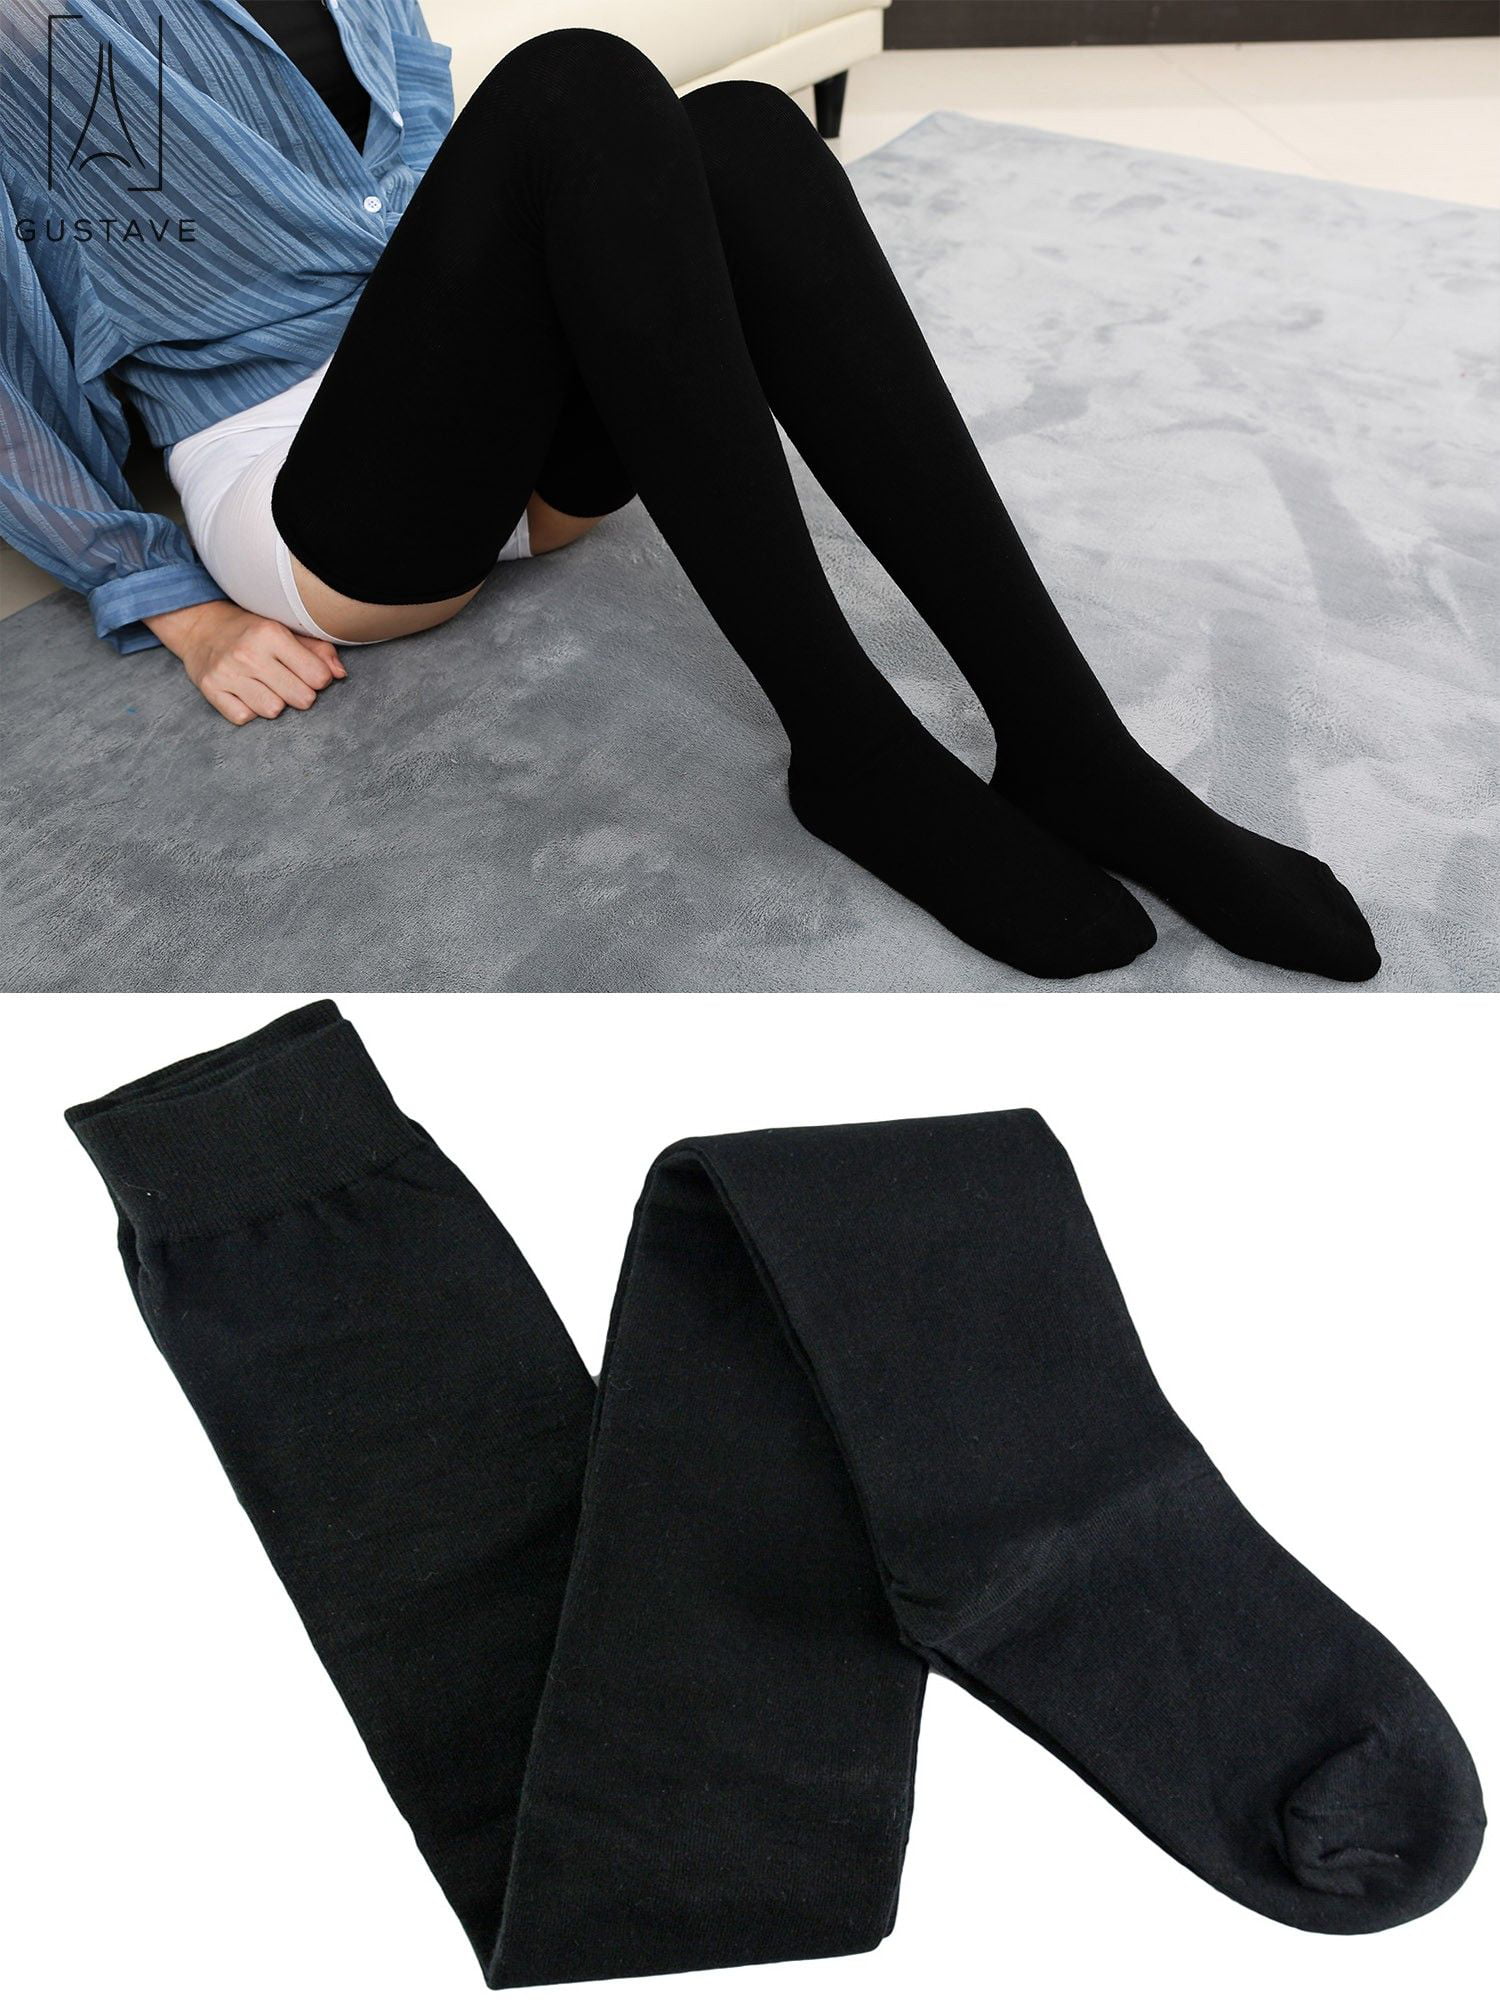 Gustave - GustaveDesign Women Girl Extra Long Fashion Thigh High Socks ...